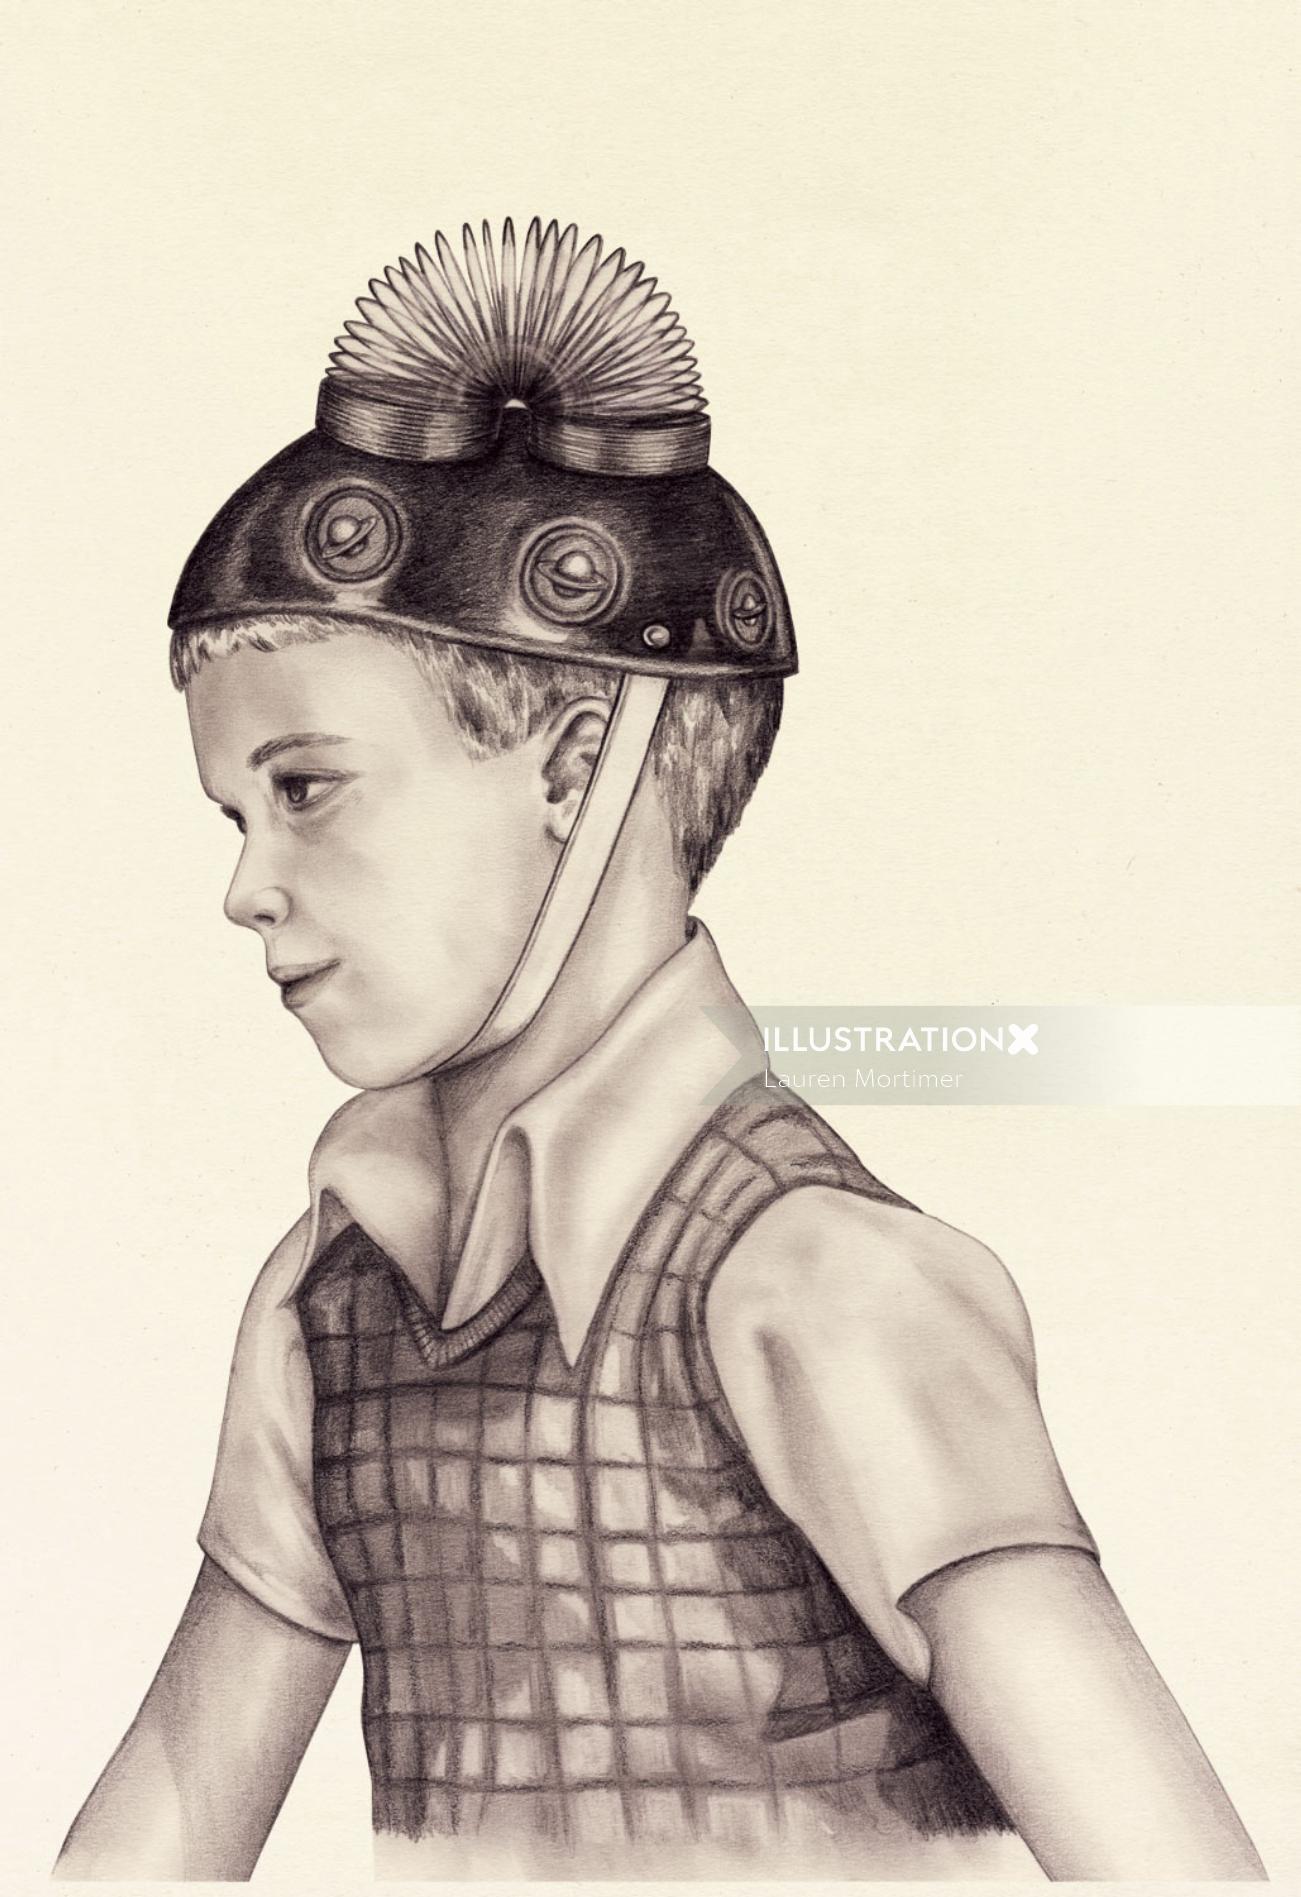 Boy with technical helmet
